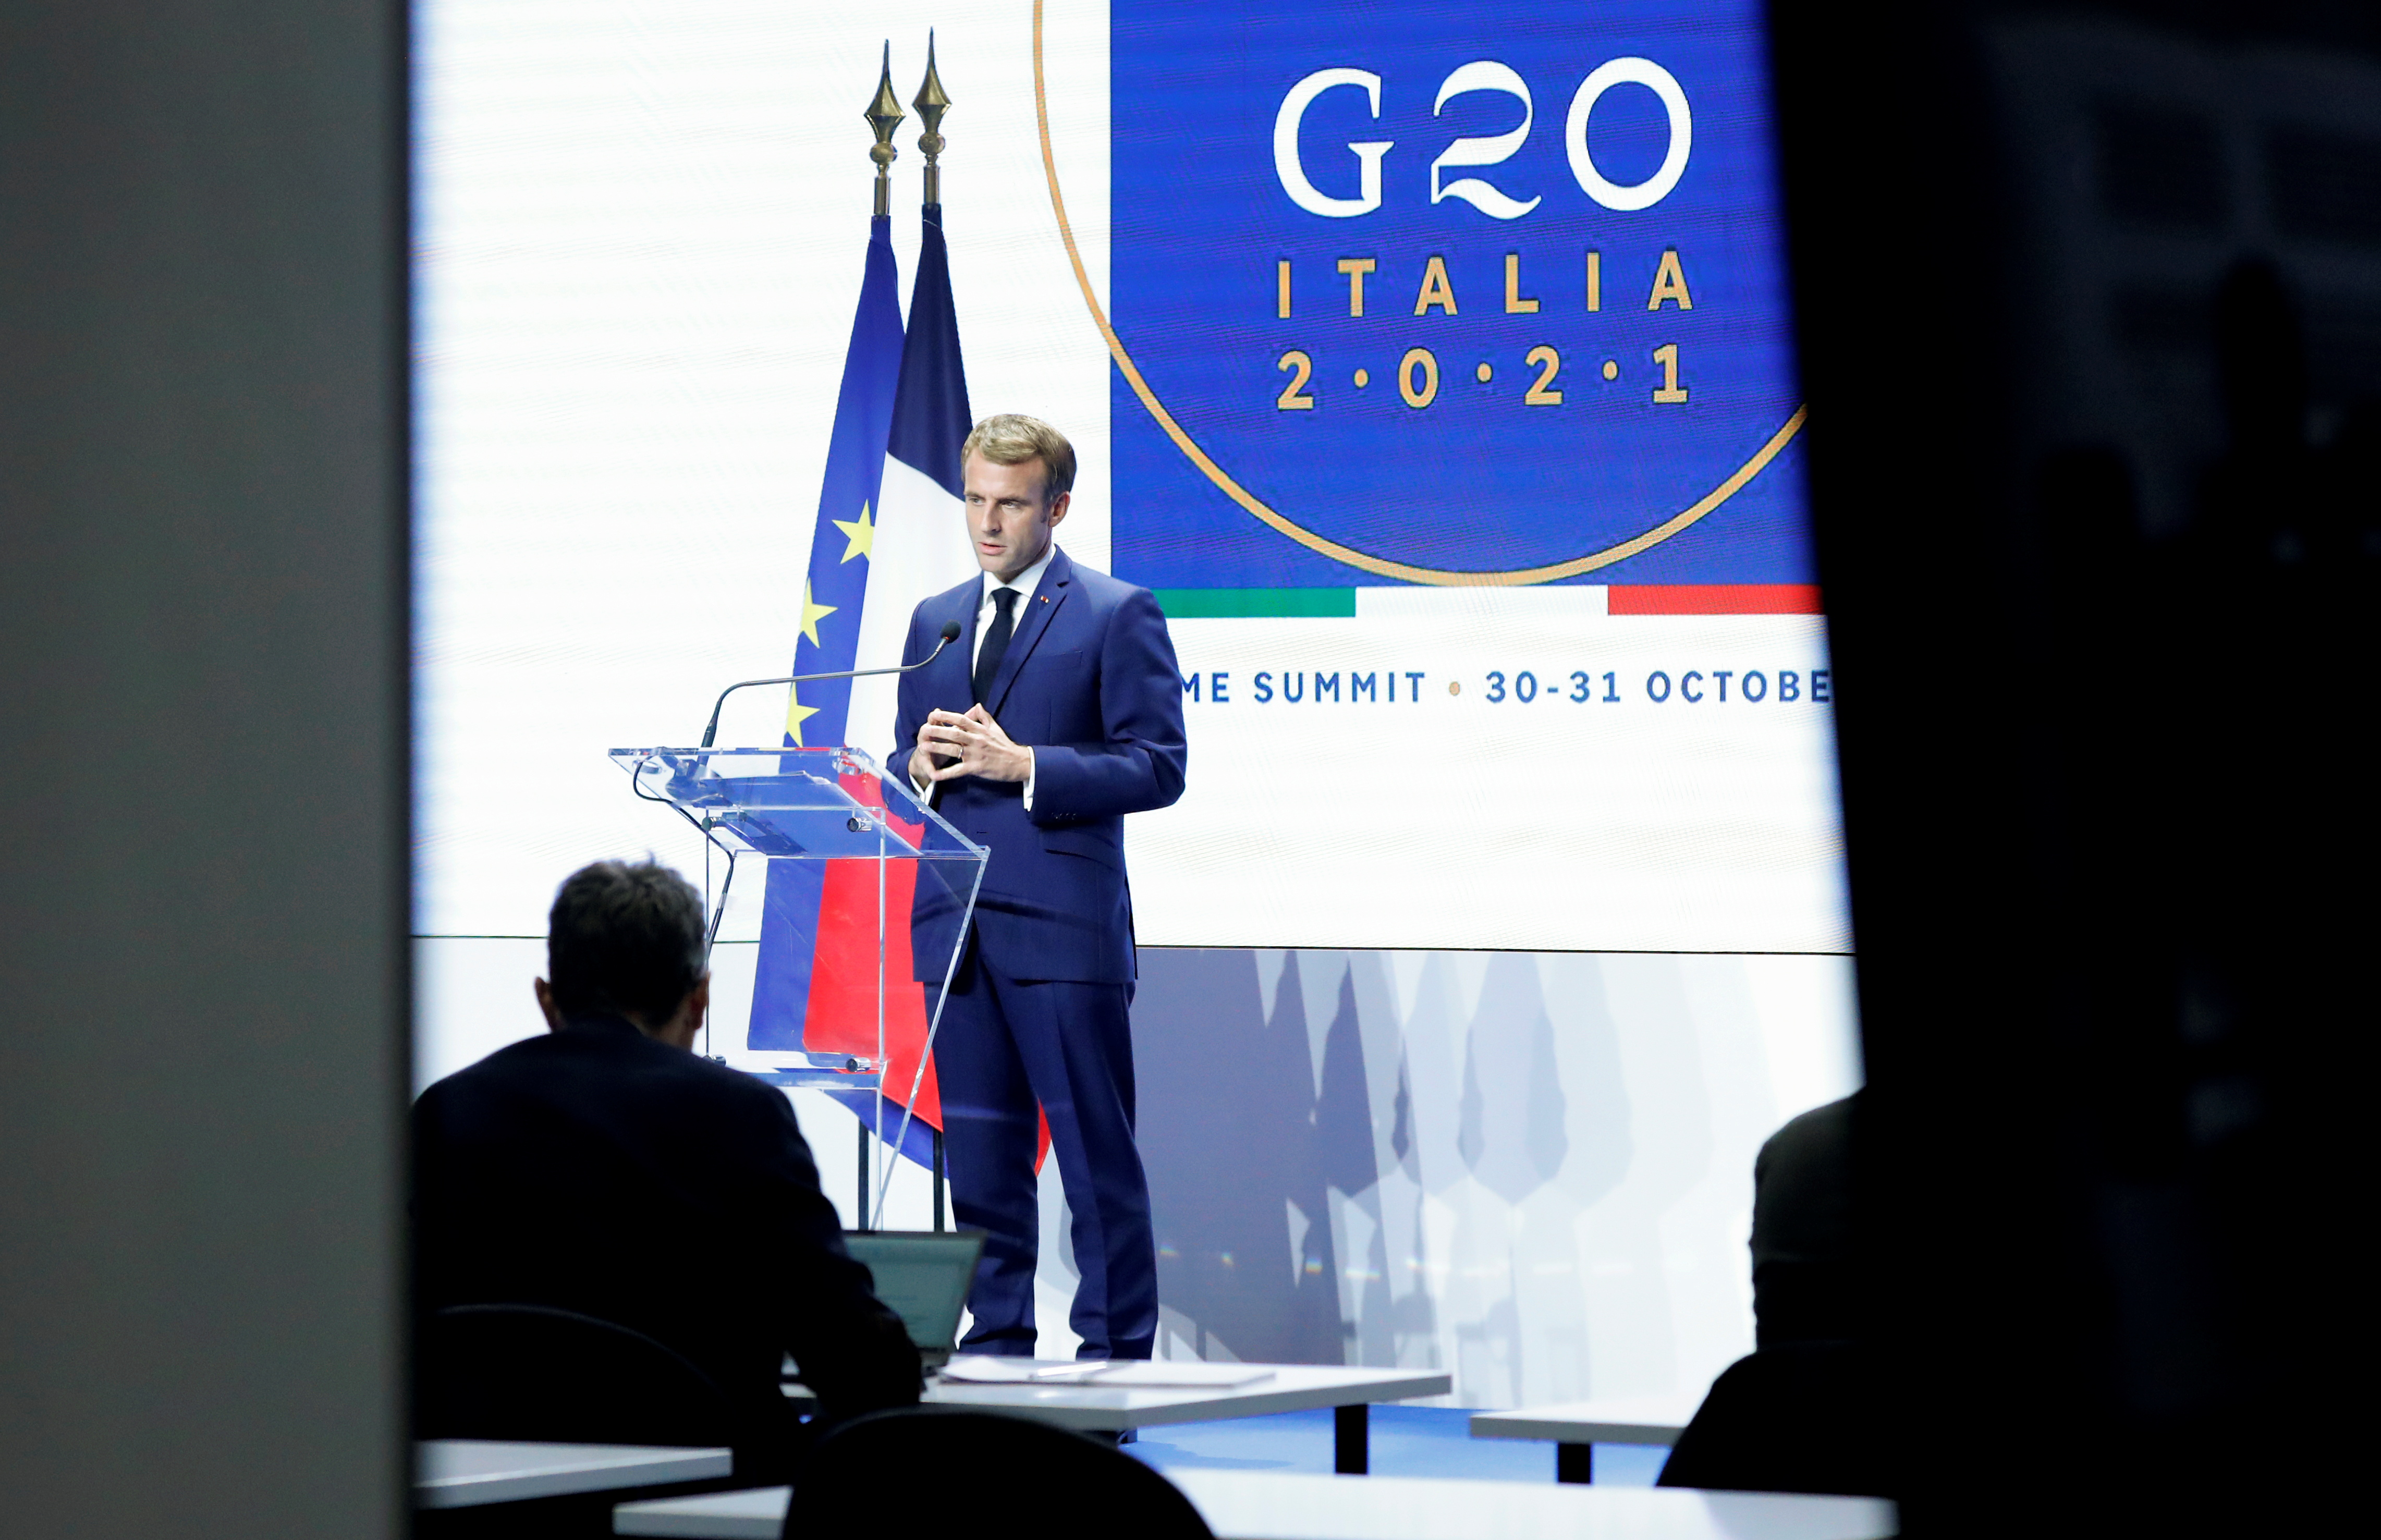 G20 summit in Rome